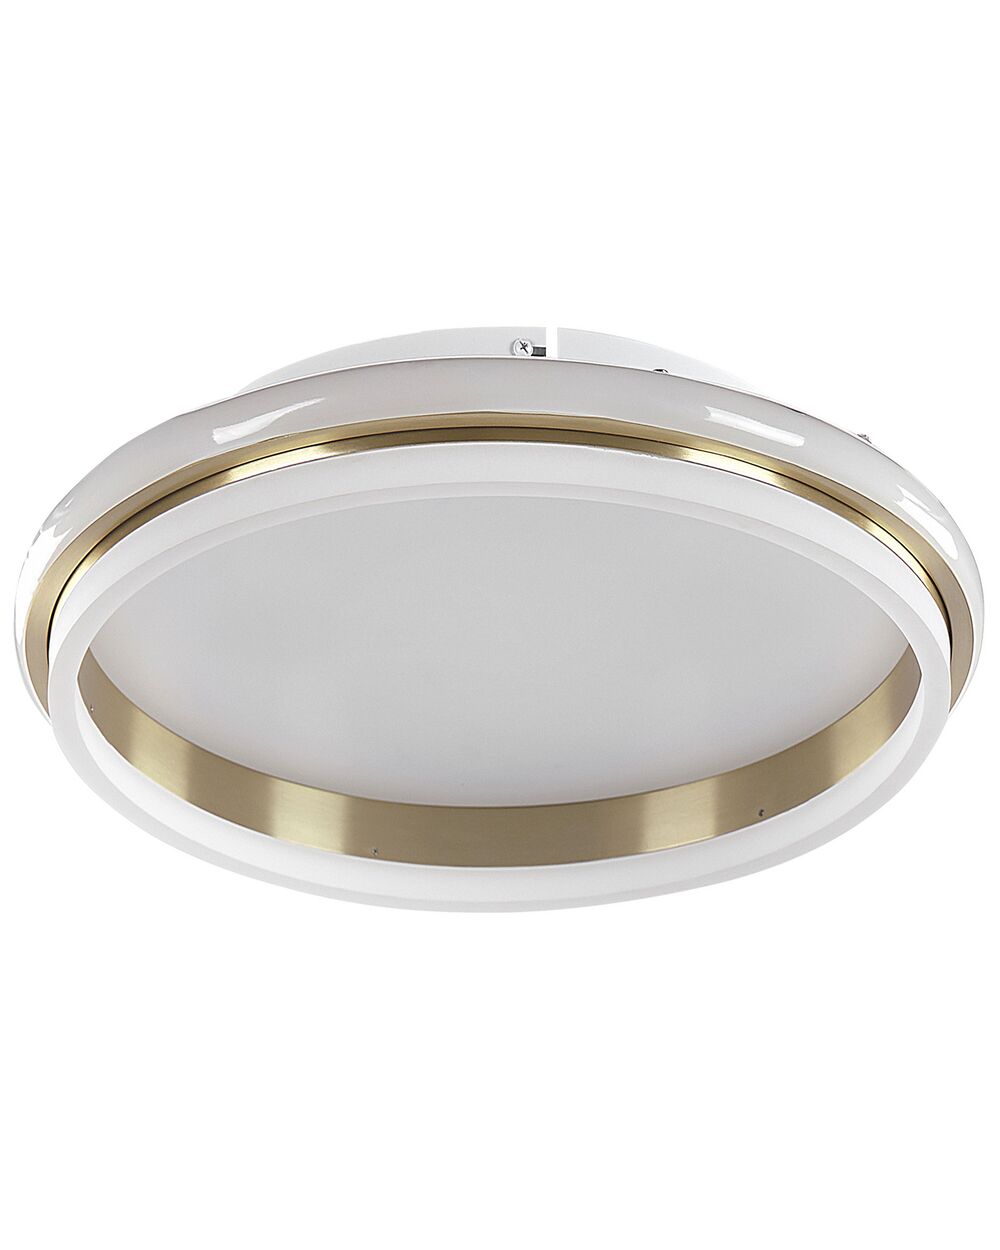 Deckenleuchte LED weiß gold cm ⌀ TAPING 64 